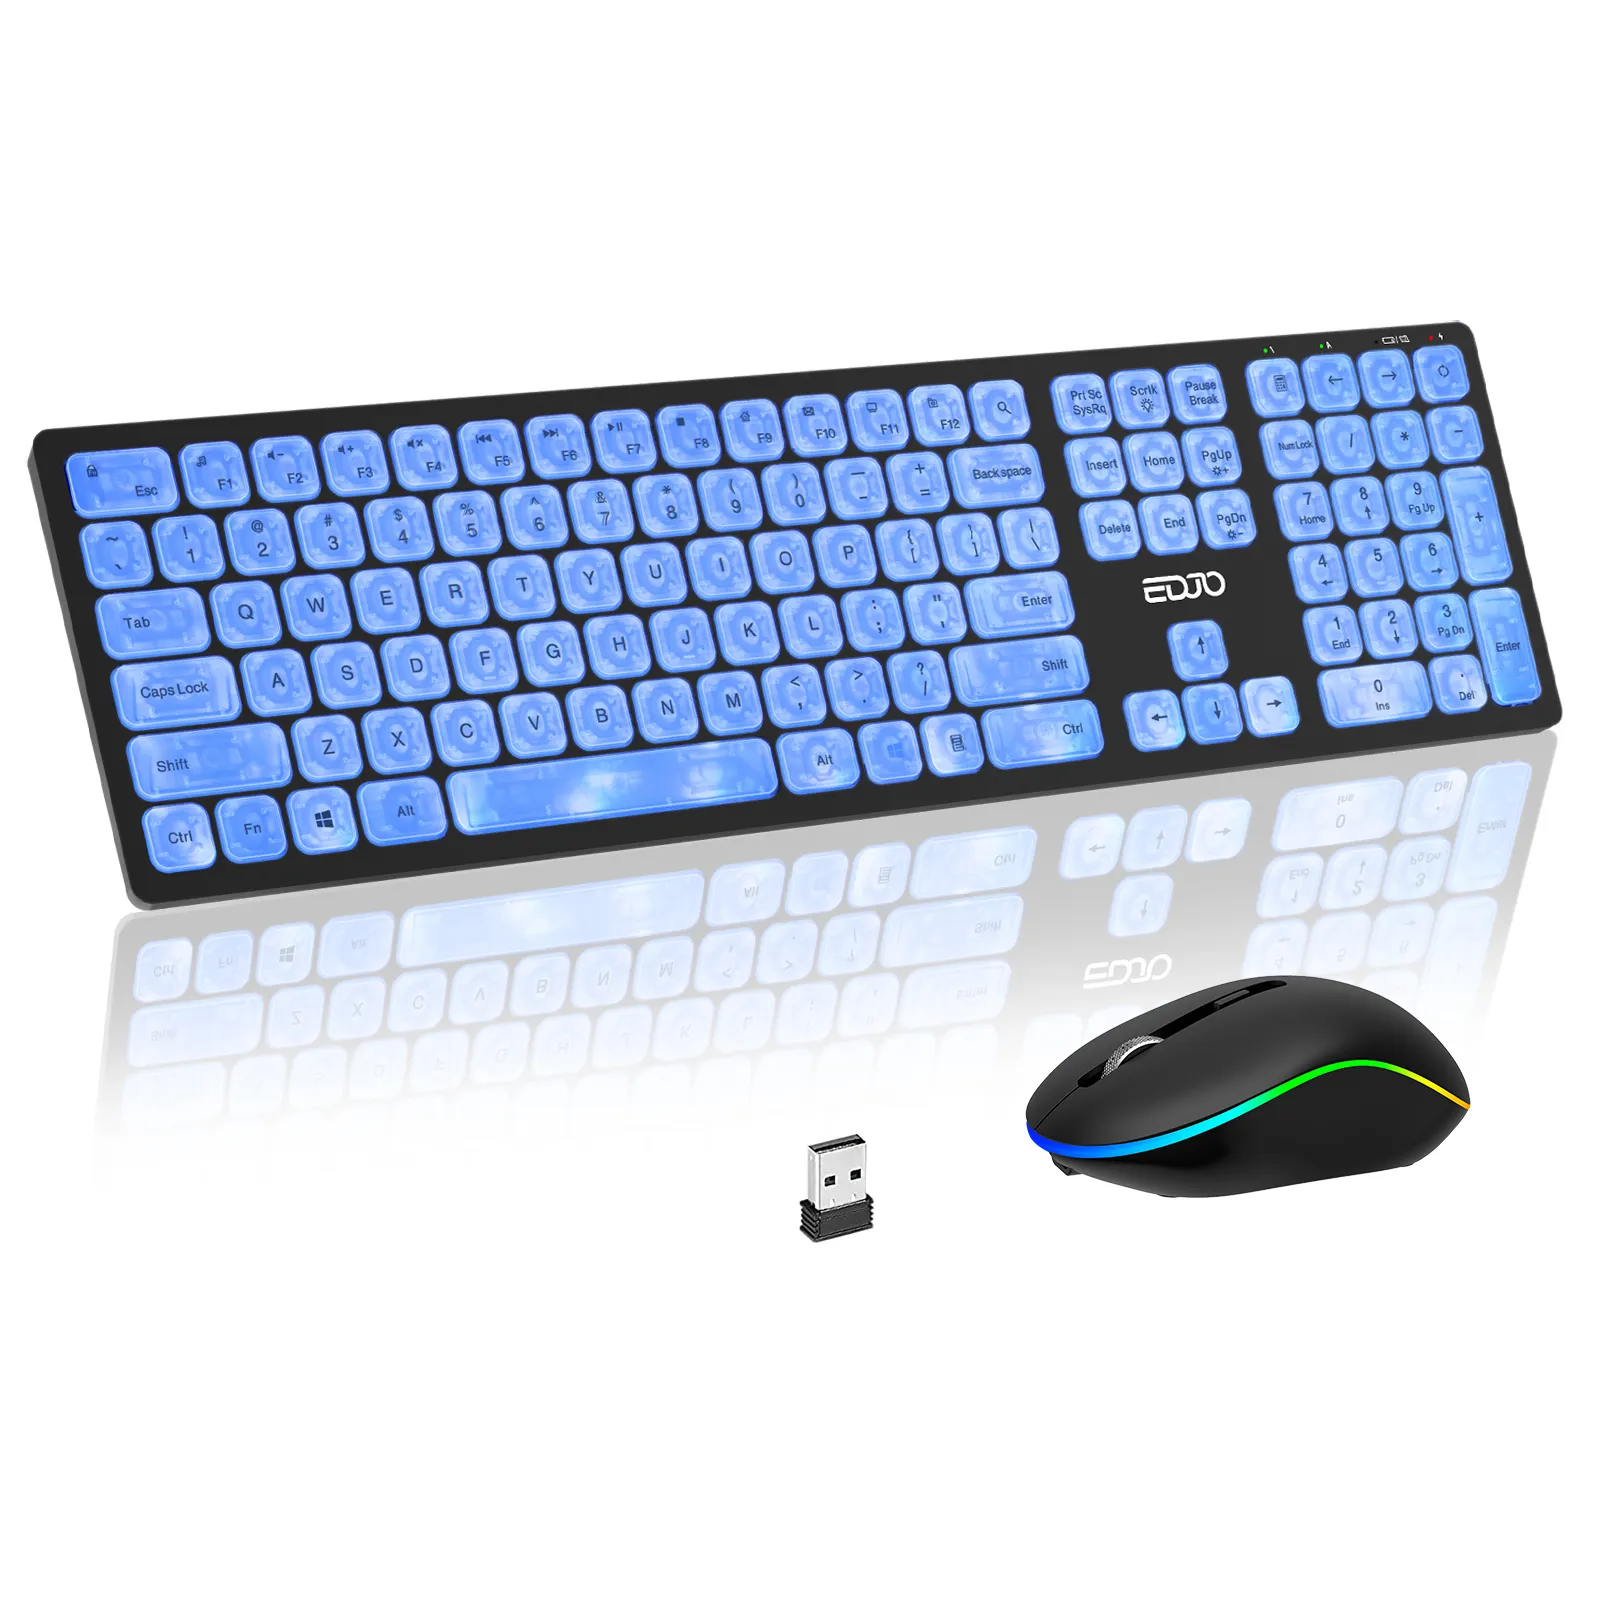 Tecla transparente con efectos retroiluminados de 7 colores, luz silenciosa, combinación de teclado y ratón inalámbricos recargables ultrafinos